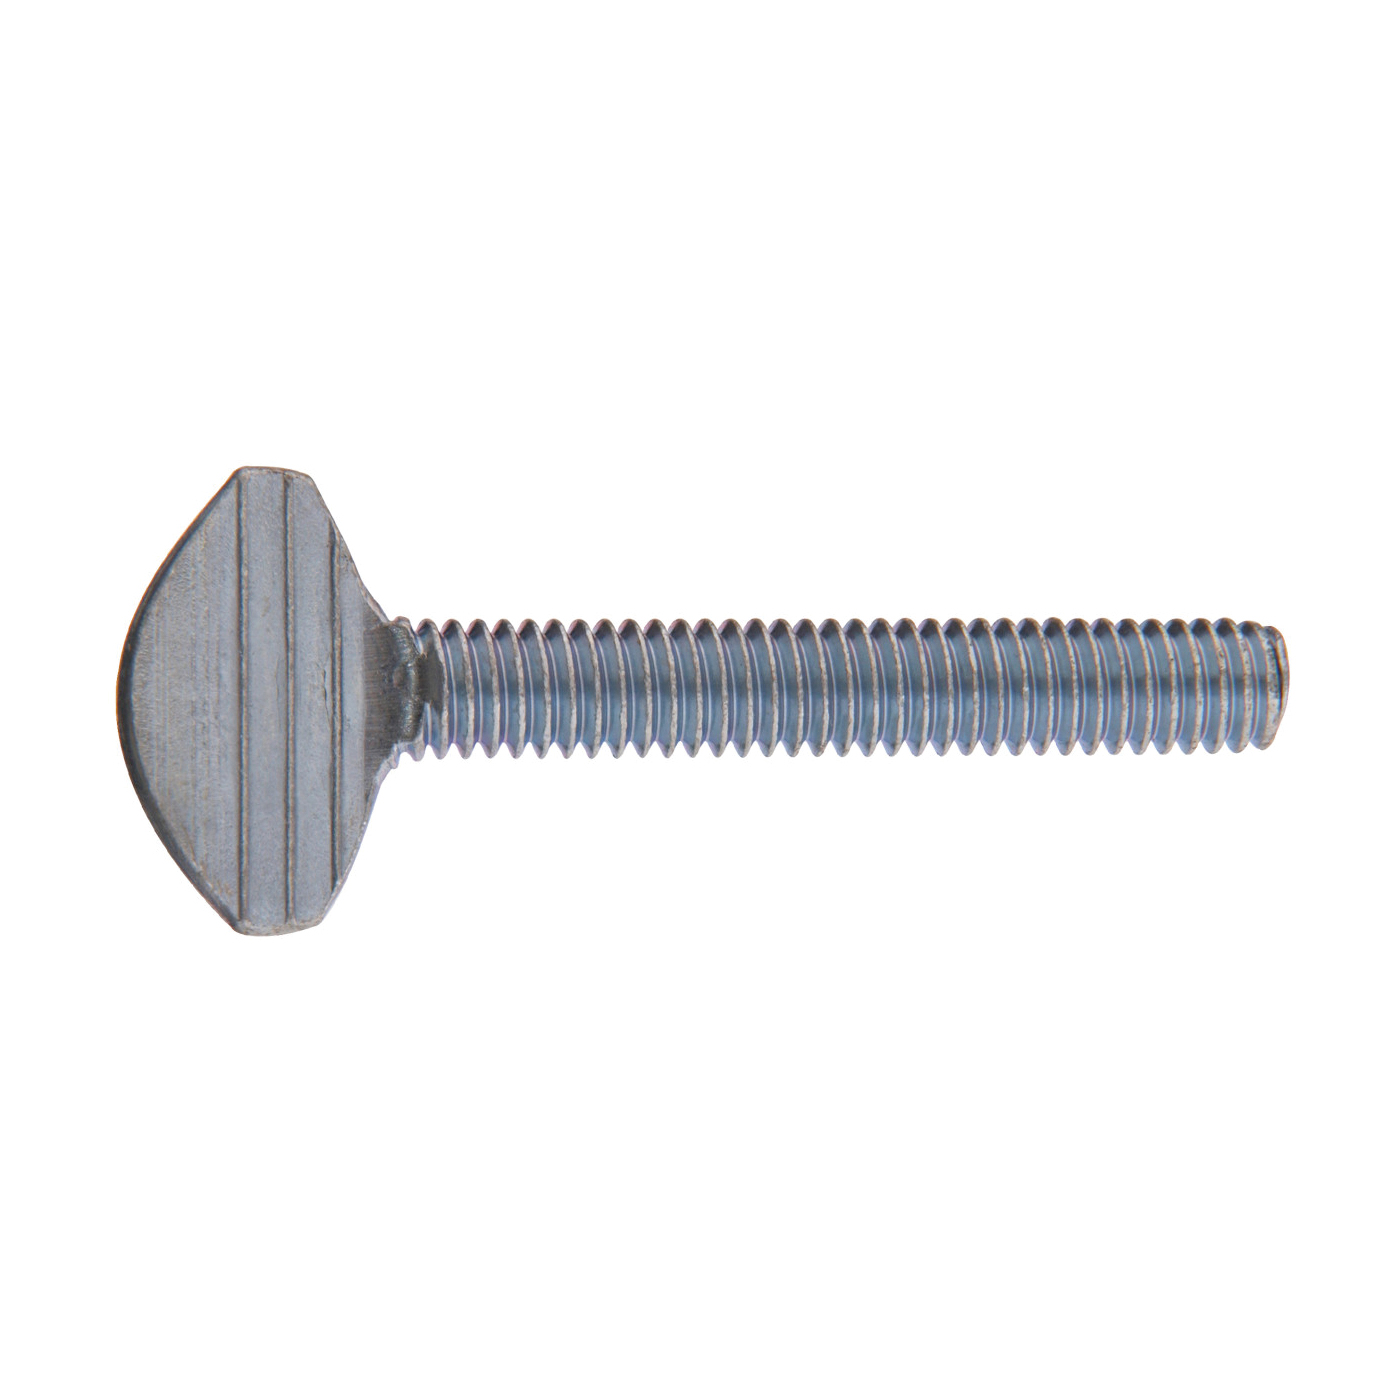 880942 Machine Screw, #6-32 Thread, 1/2 in L, Coarse Thread, Blunt Point, Steel, Zinc-Plated